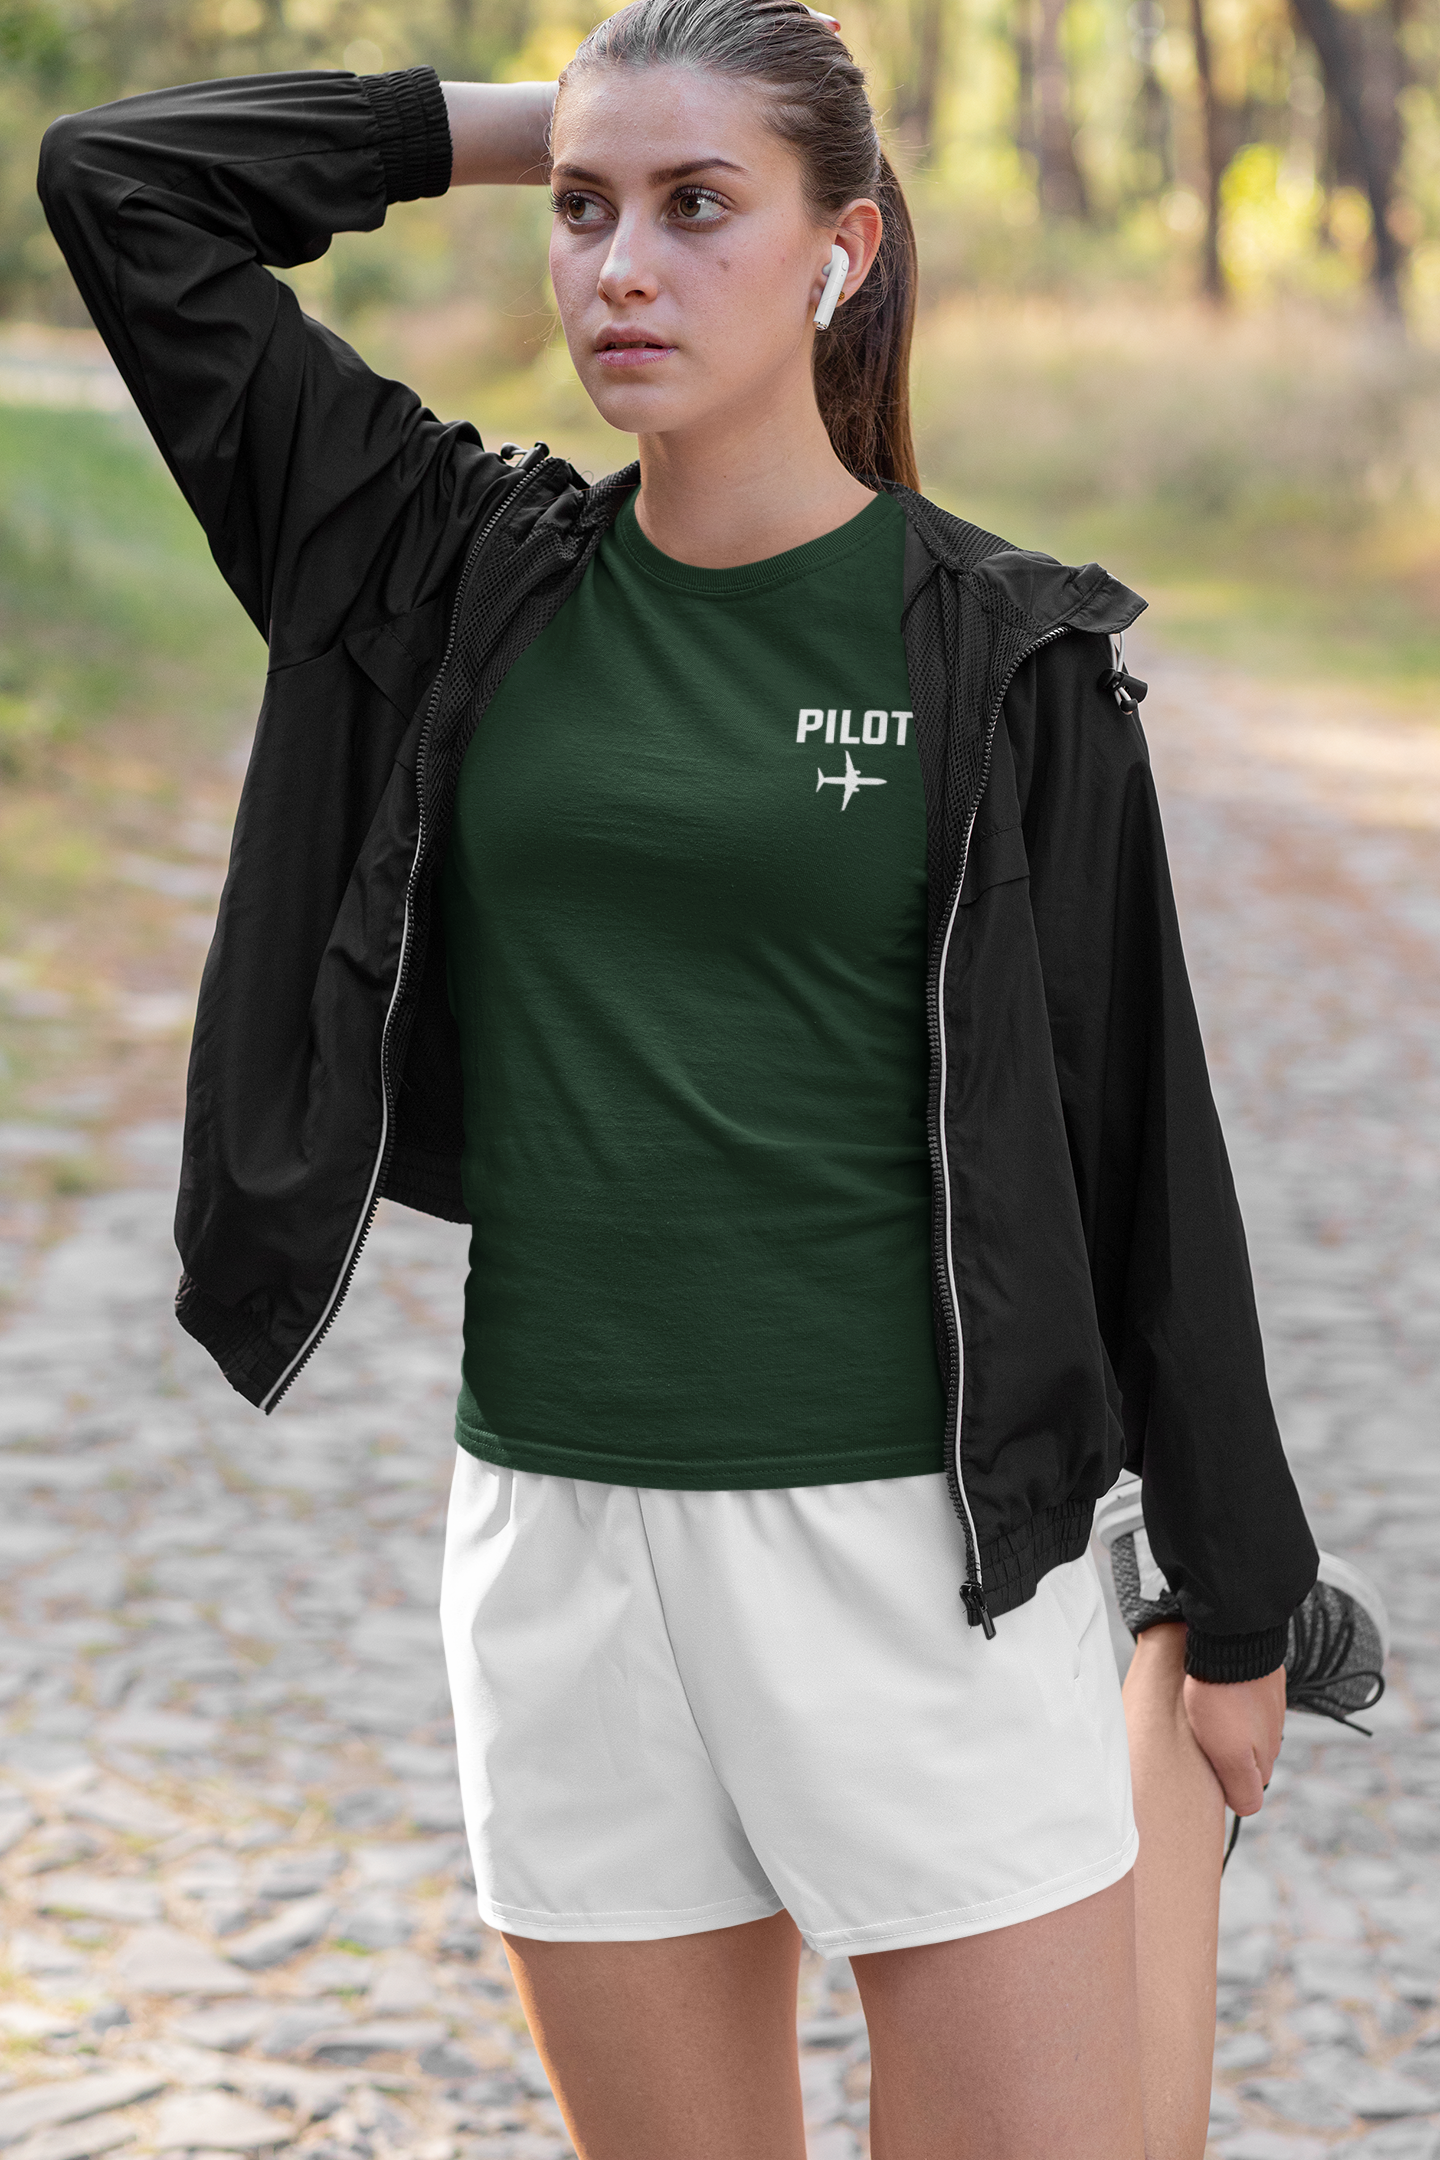 Pilot Pocket Design Pilot Women Half Sleeves T-shirt- FunkyTeesClub